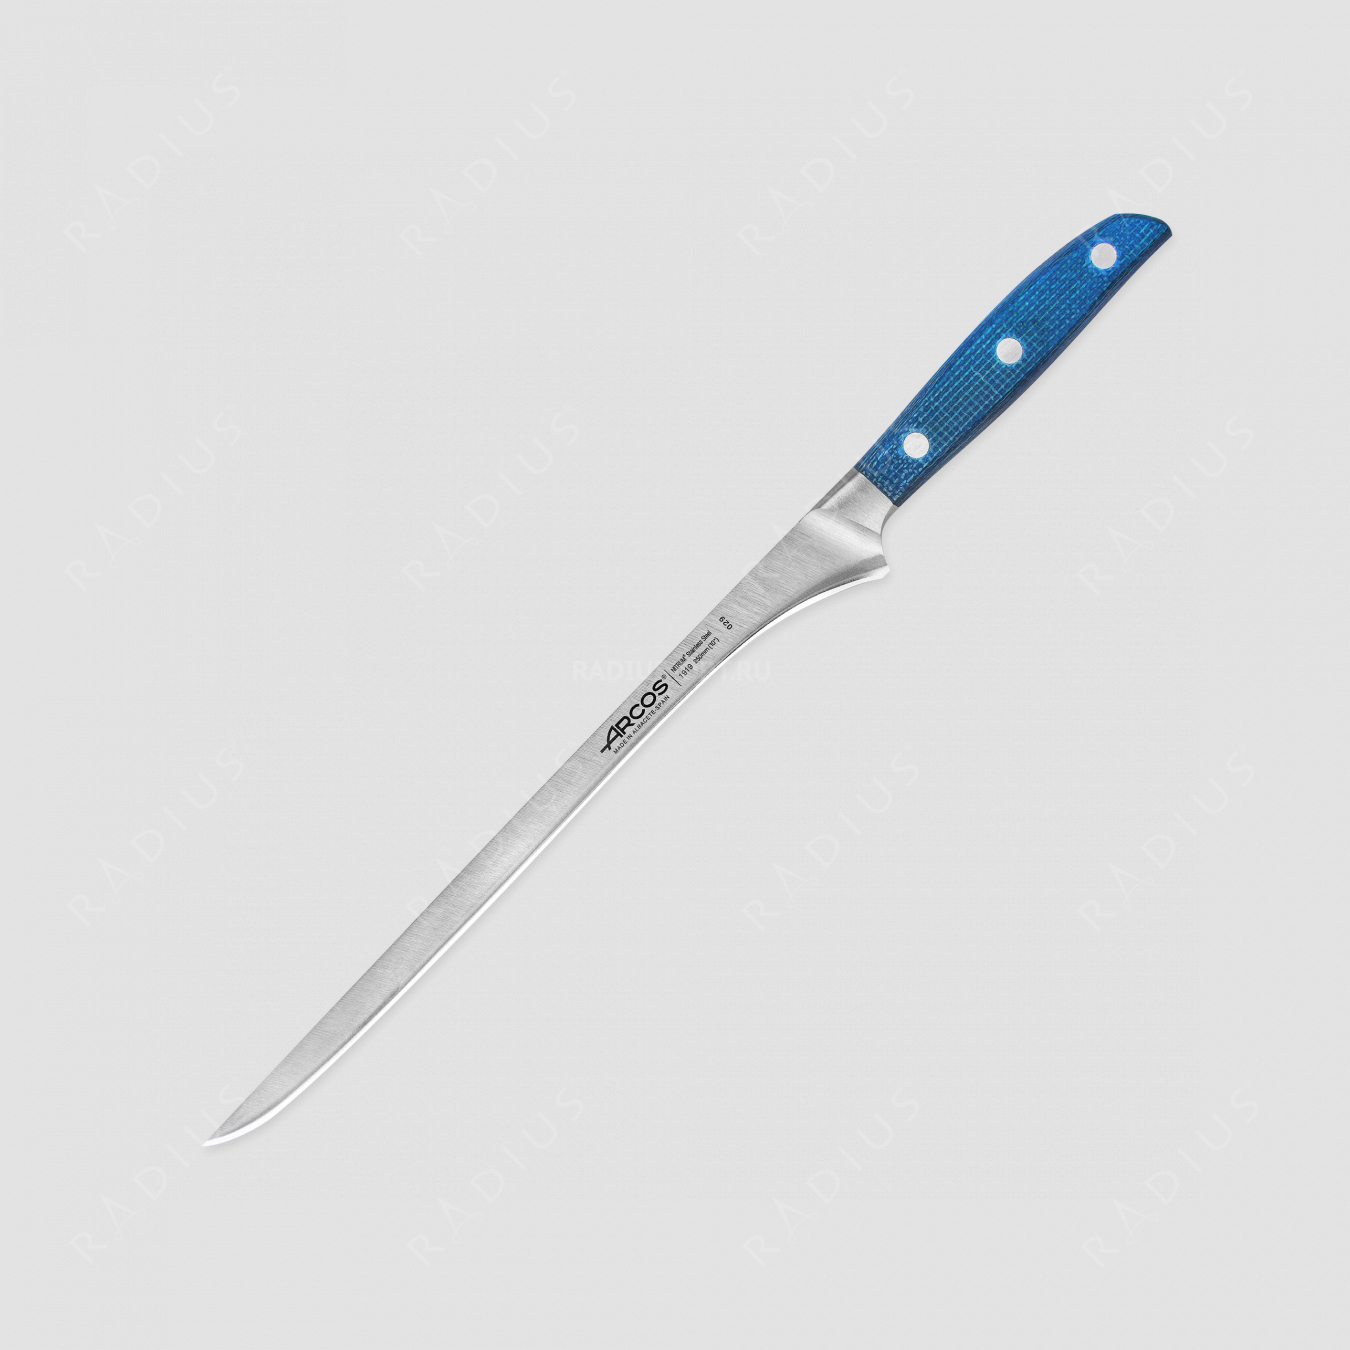 Нож кухонный для окорока, гибкий 25 см, серия Brooklyn, ARCOS, Испания